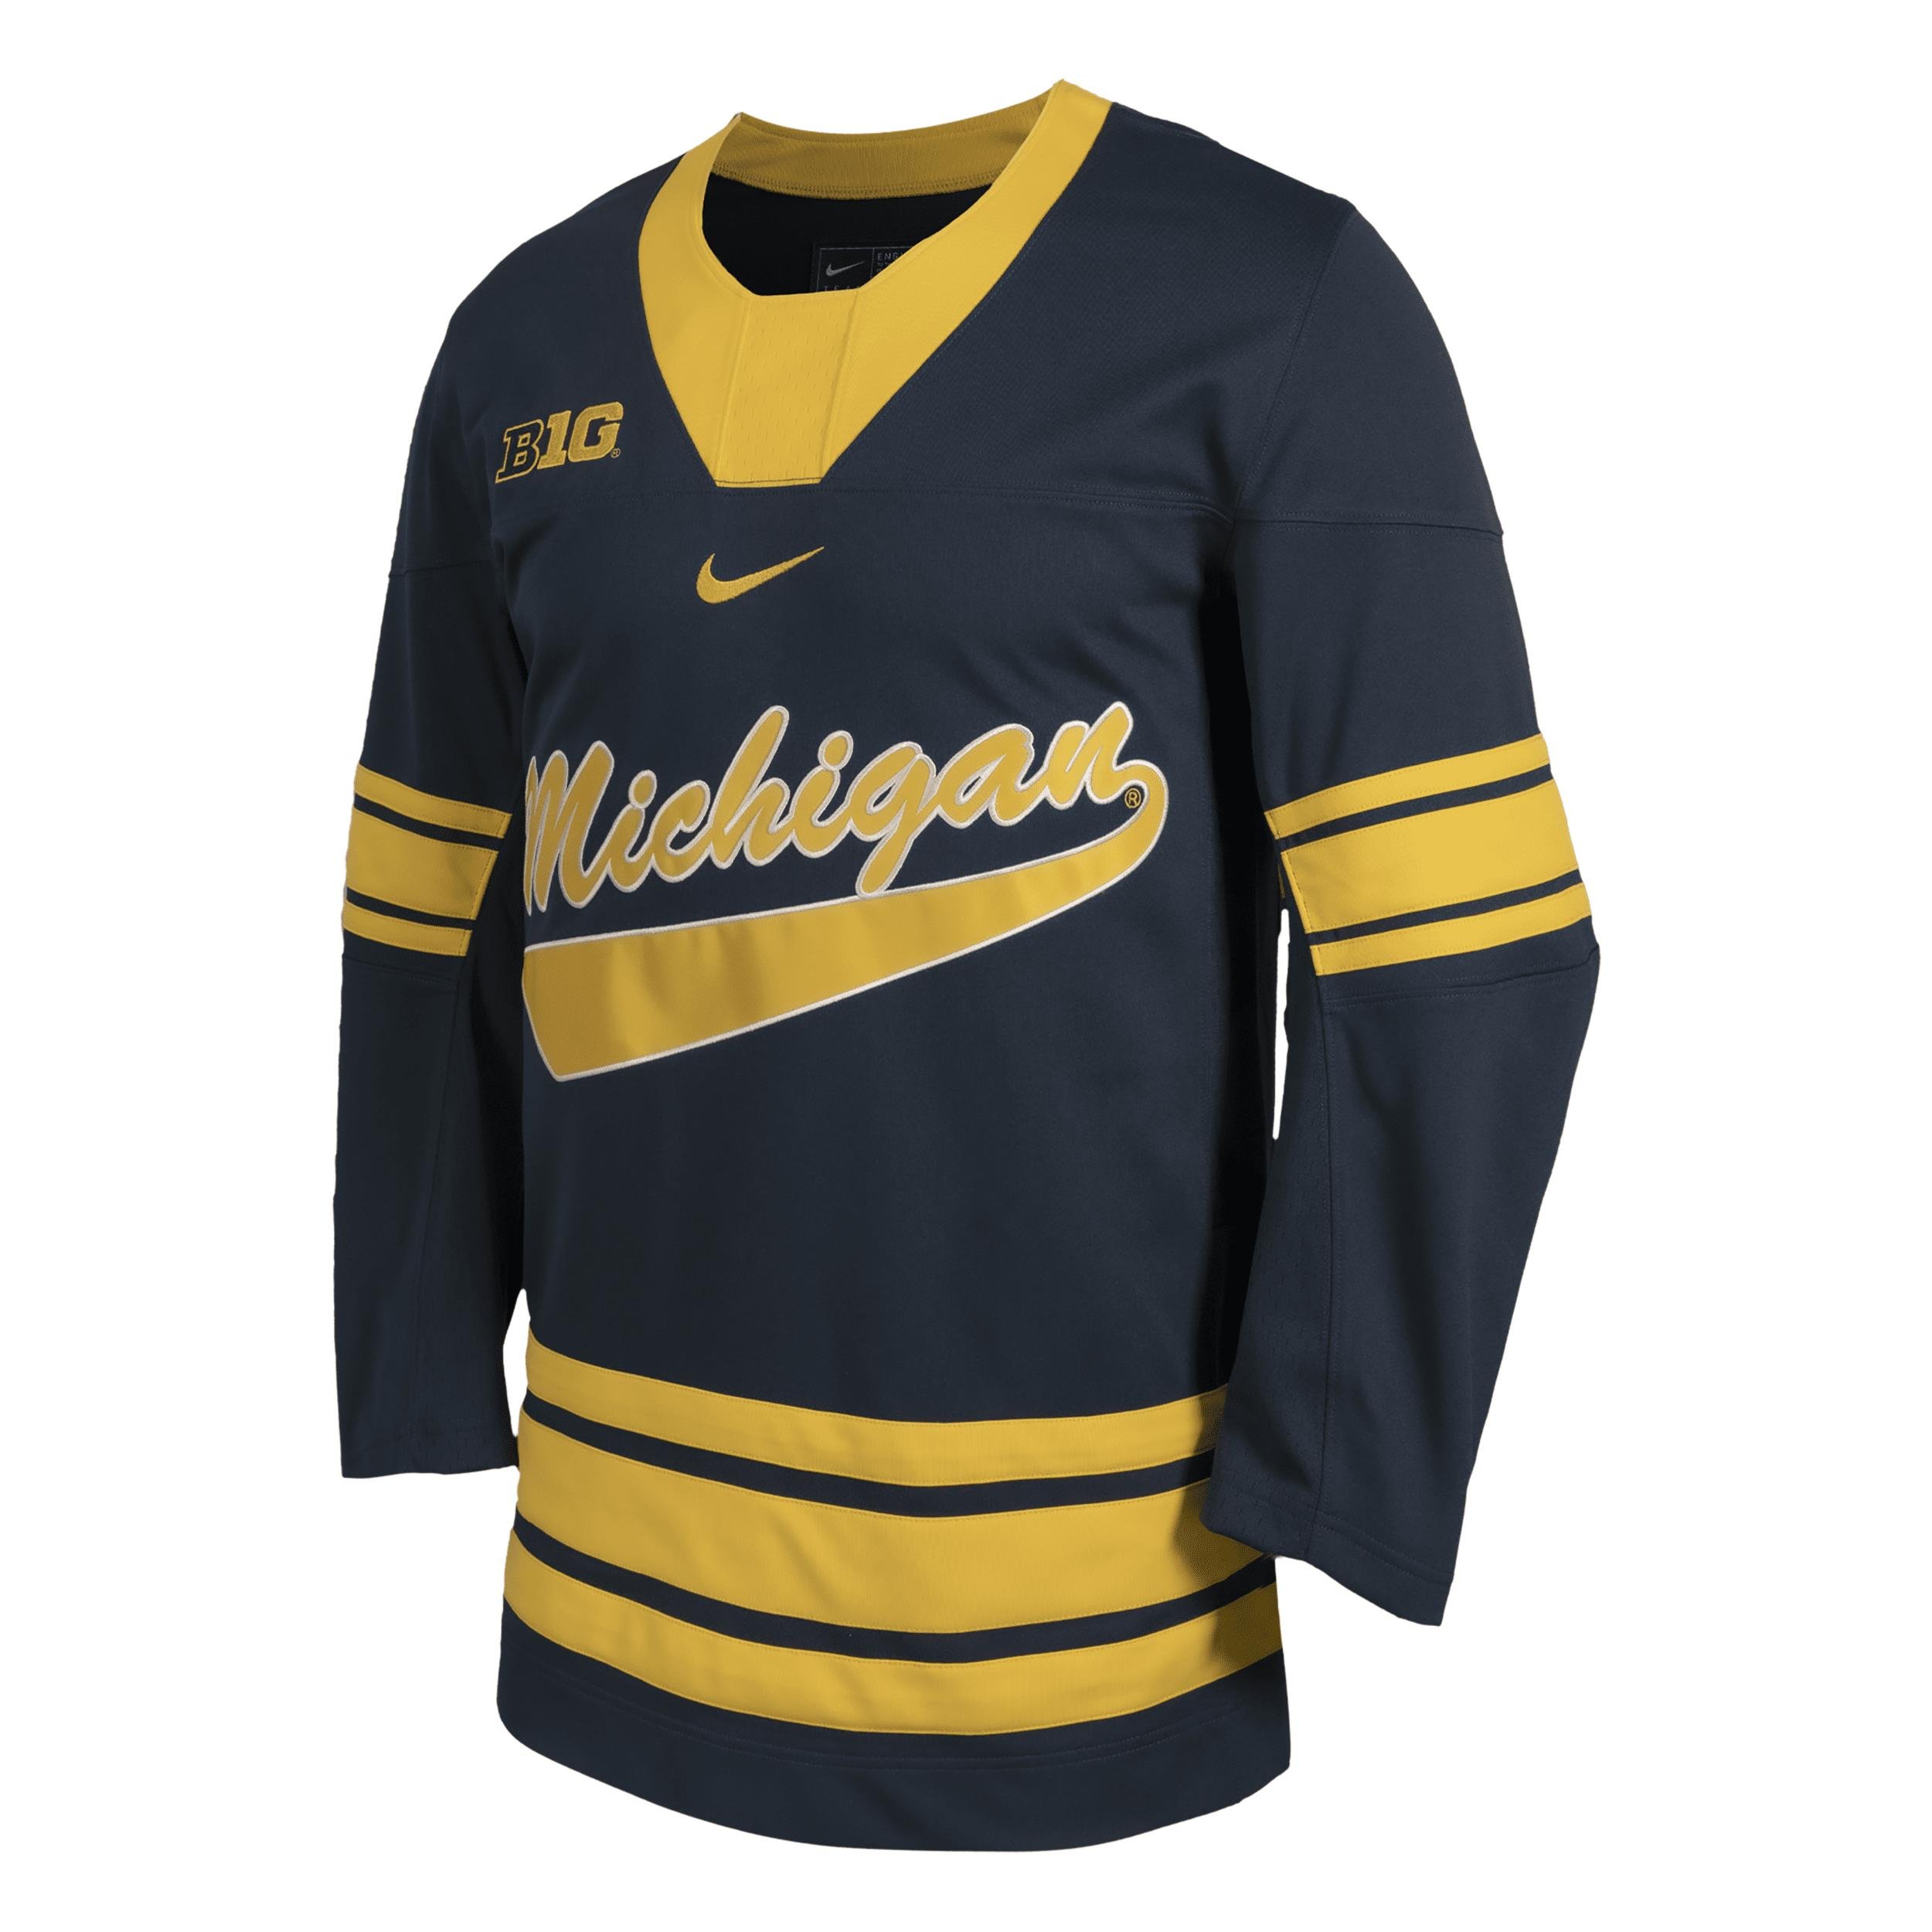 Michigan Nike Unisex College Hockey Jersey by NIKE